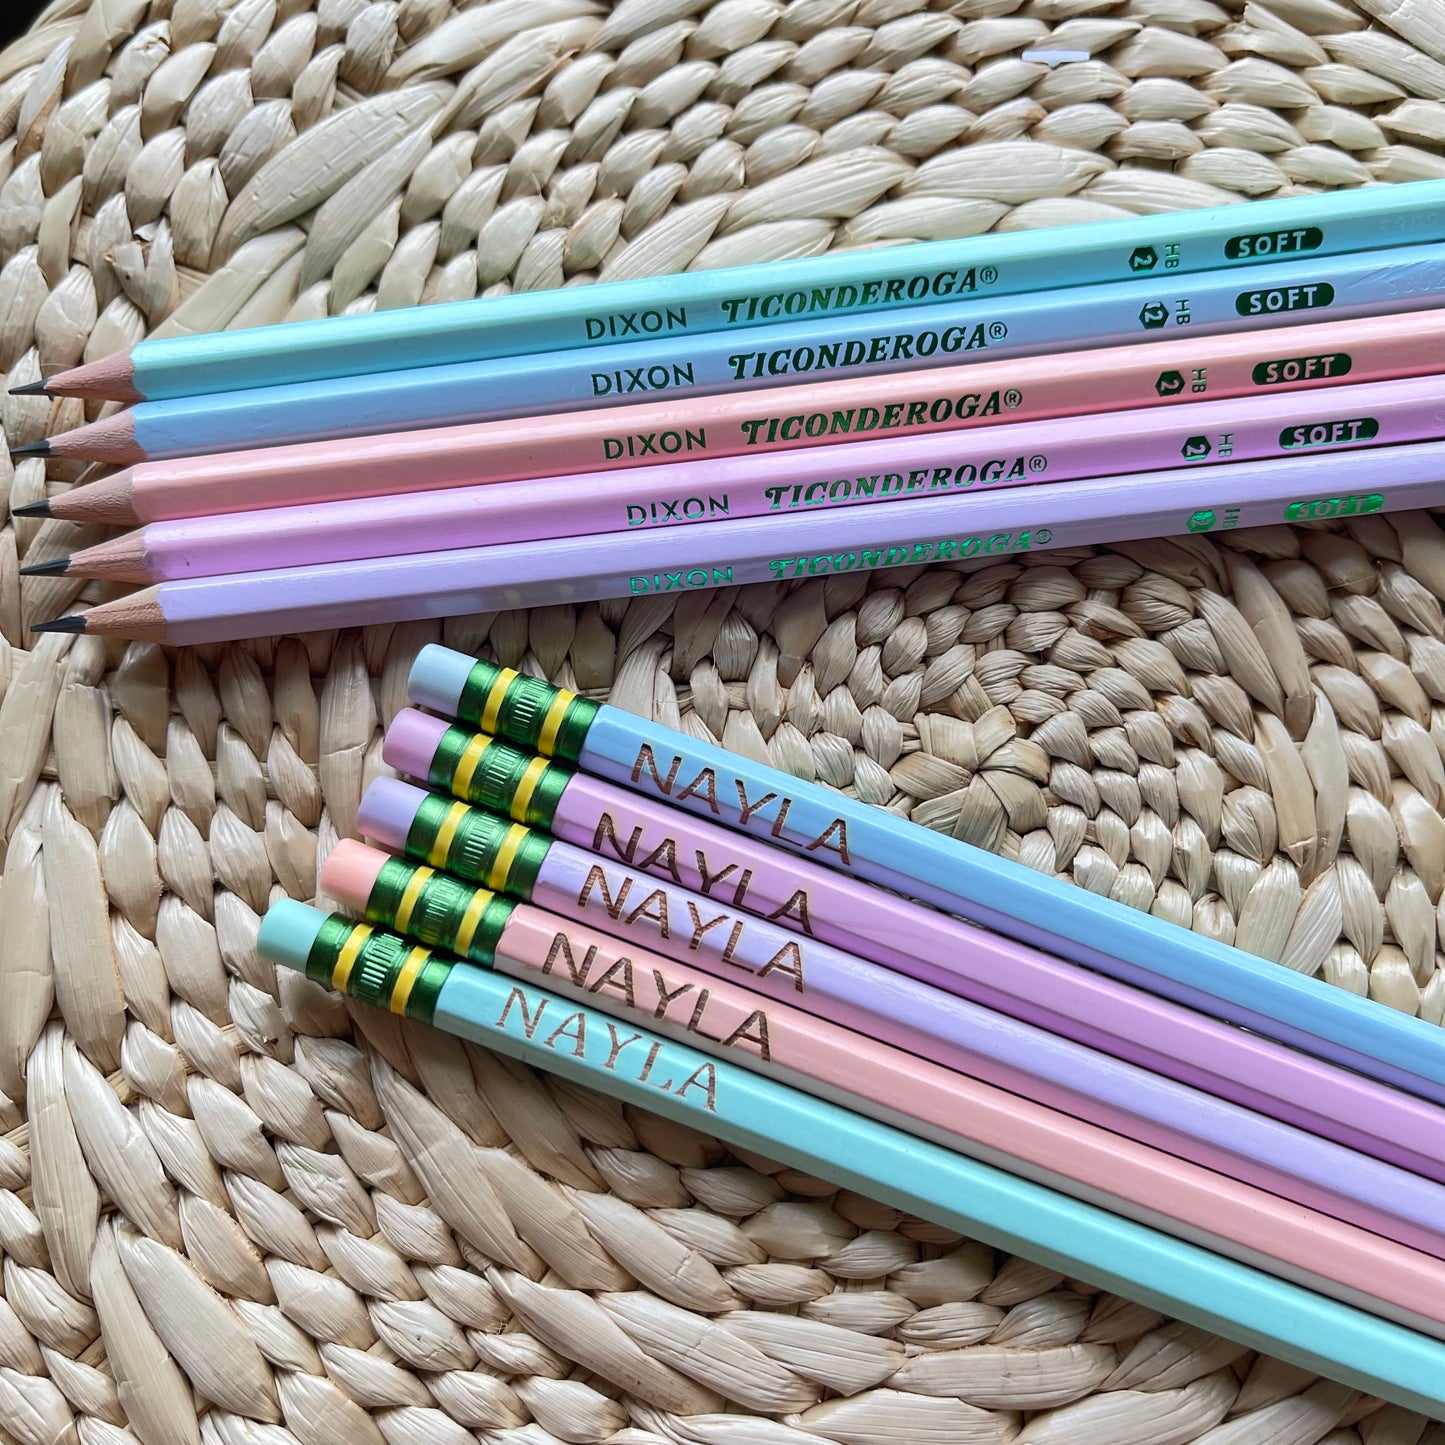 Personalized Engraved Pencils- 10 pk Pastel